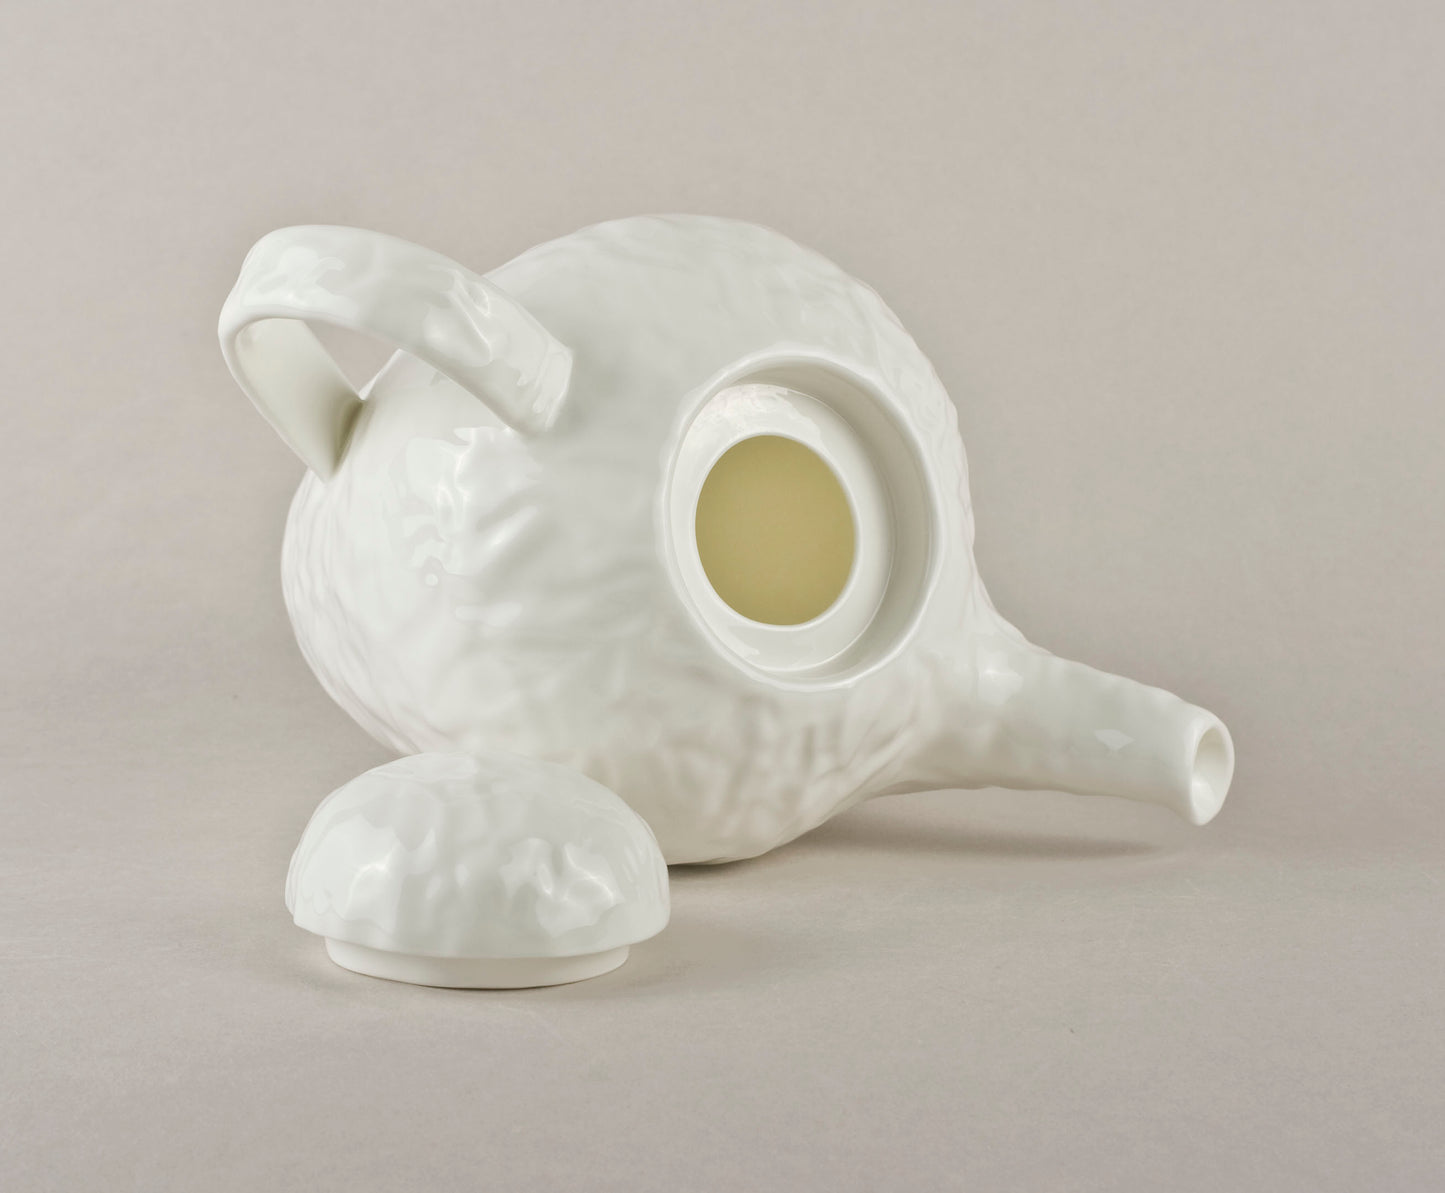 Porcelain Crumpled Kettle S